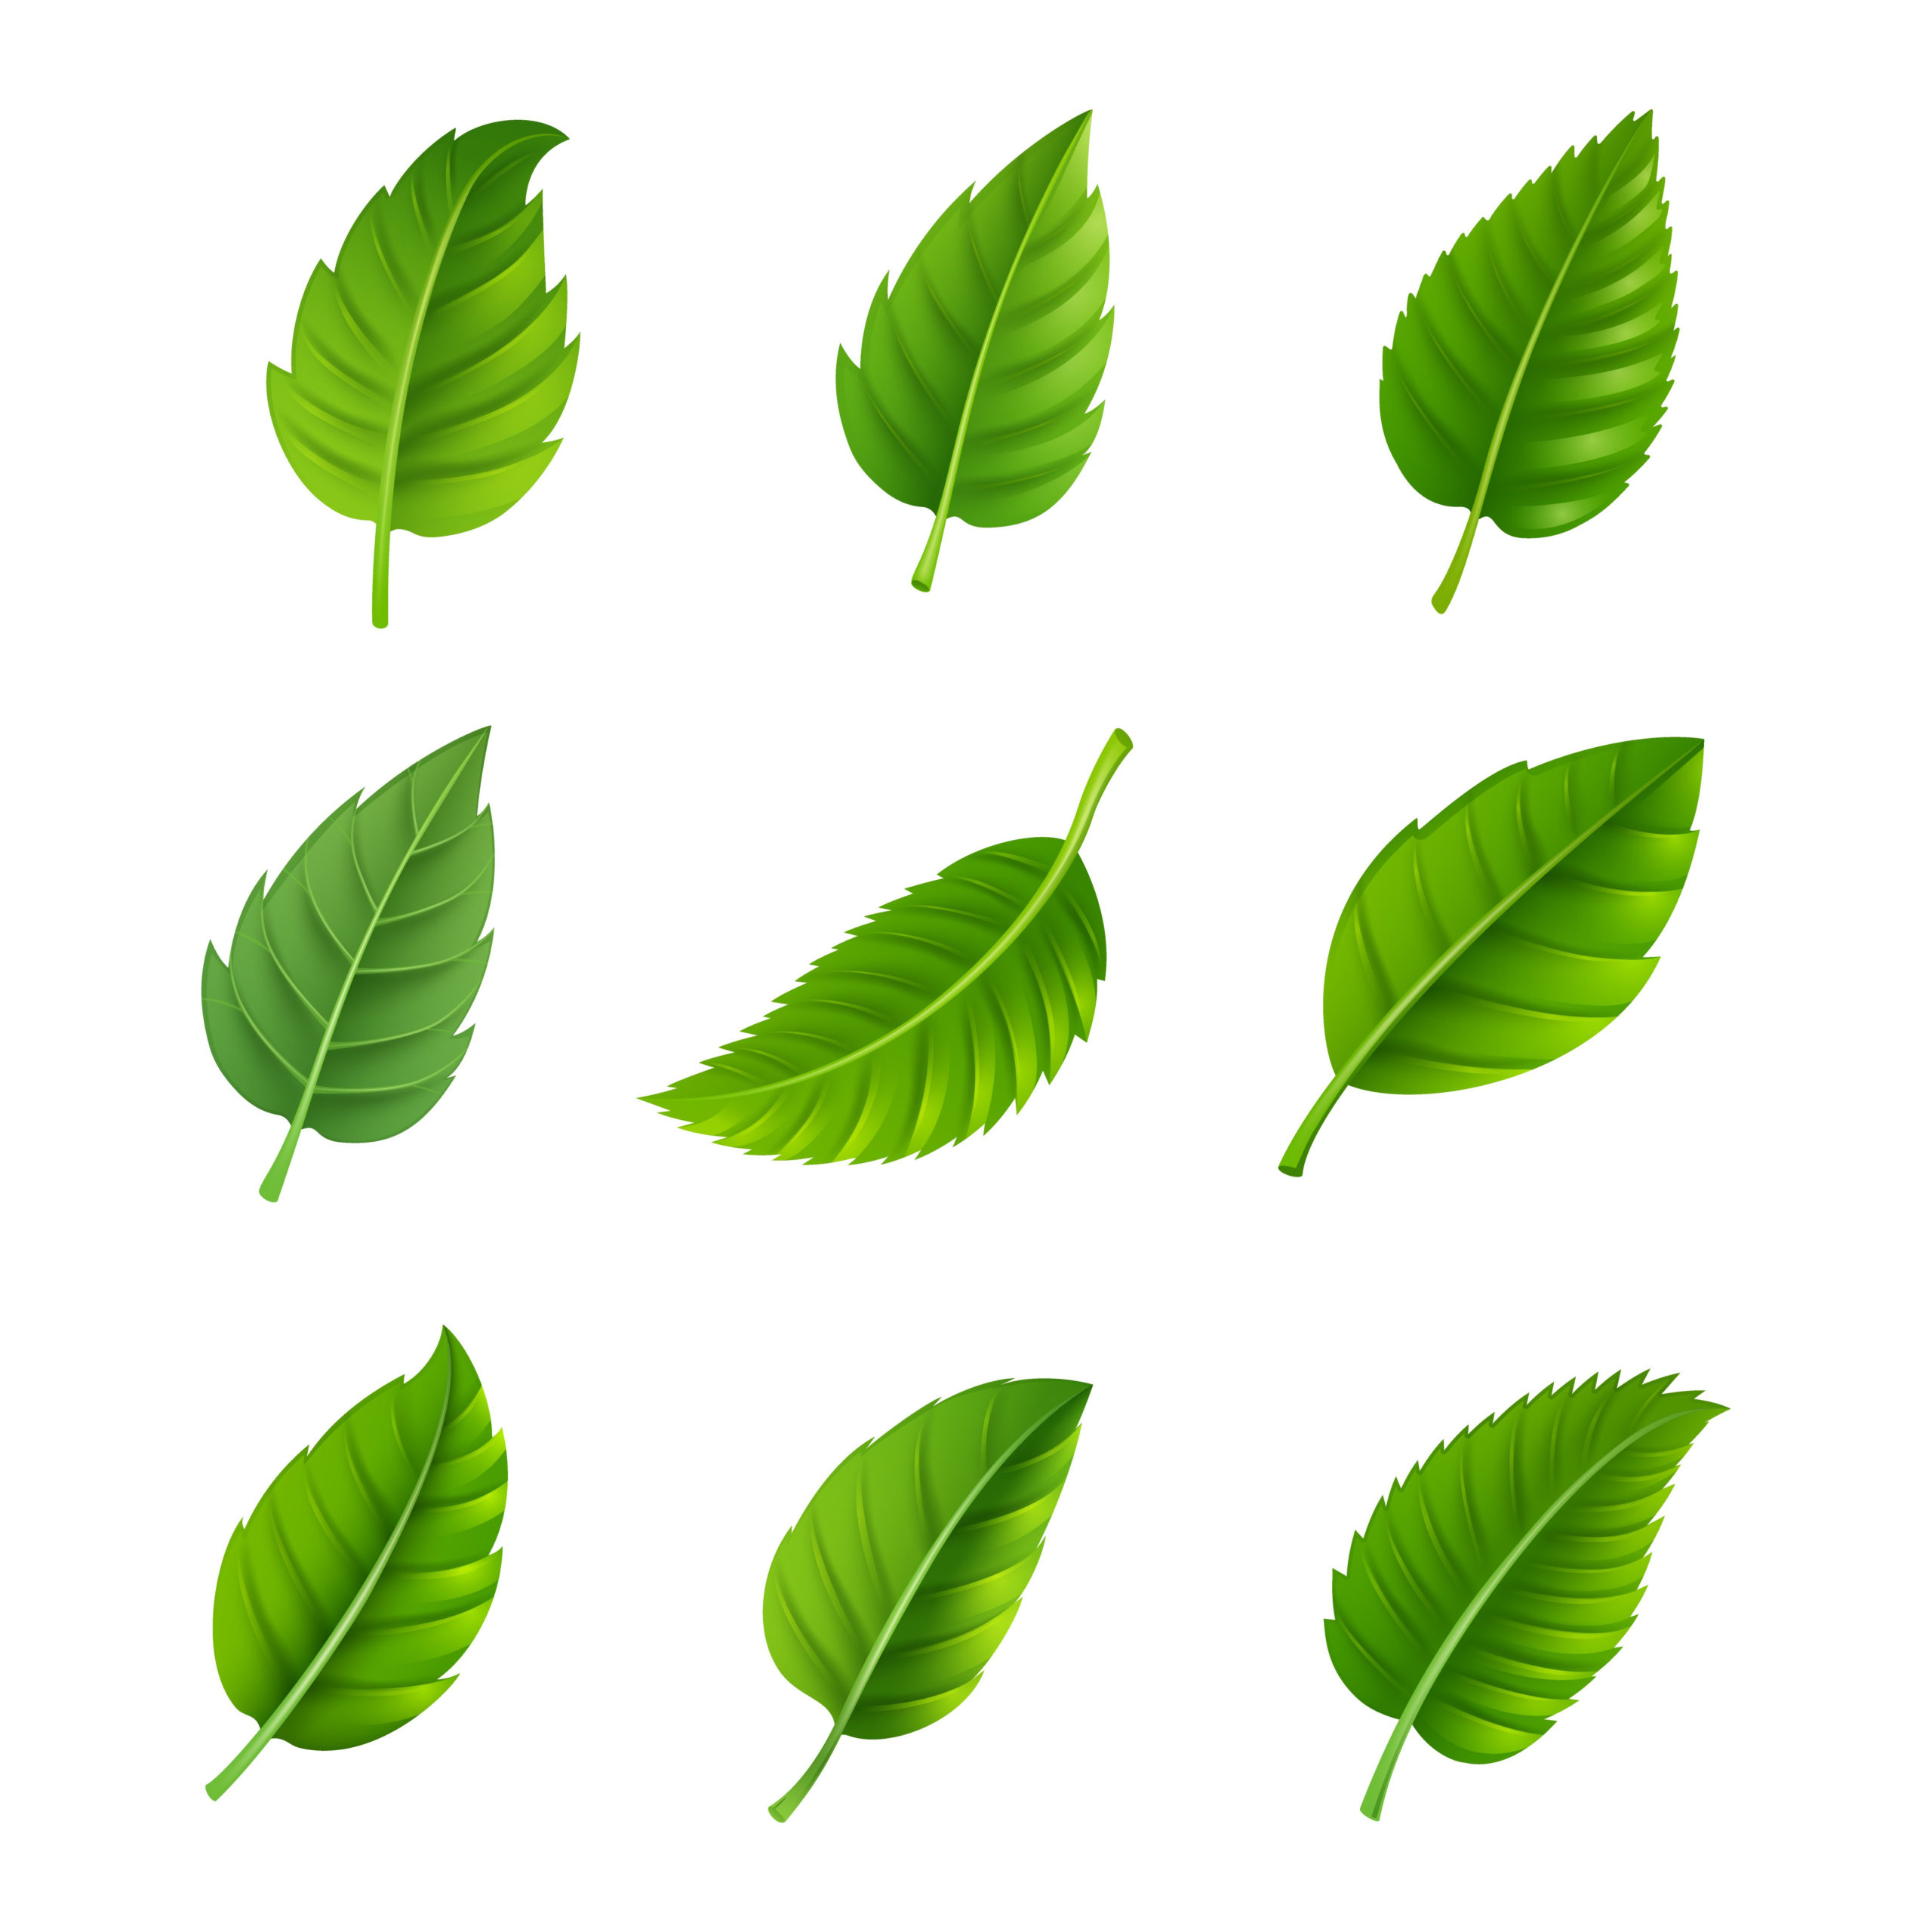 Green Leaves Decorative Set 469904 Download Free Vectors 